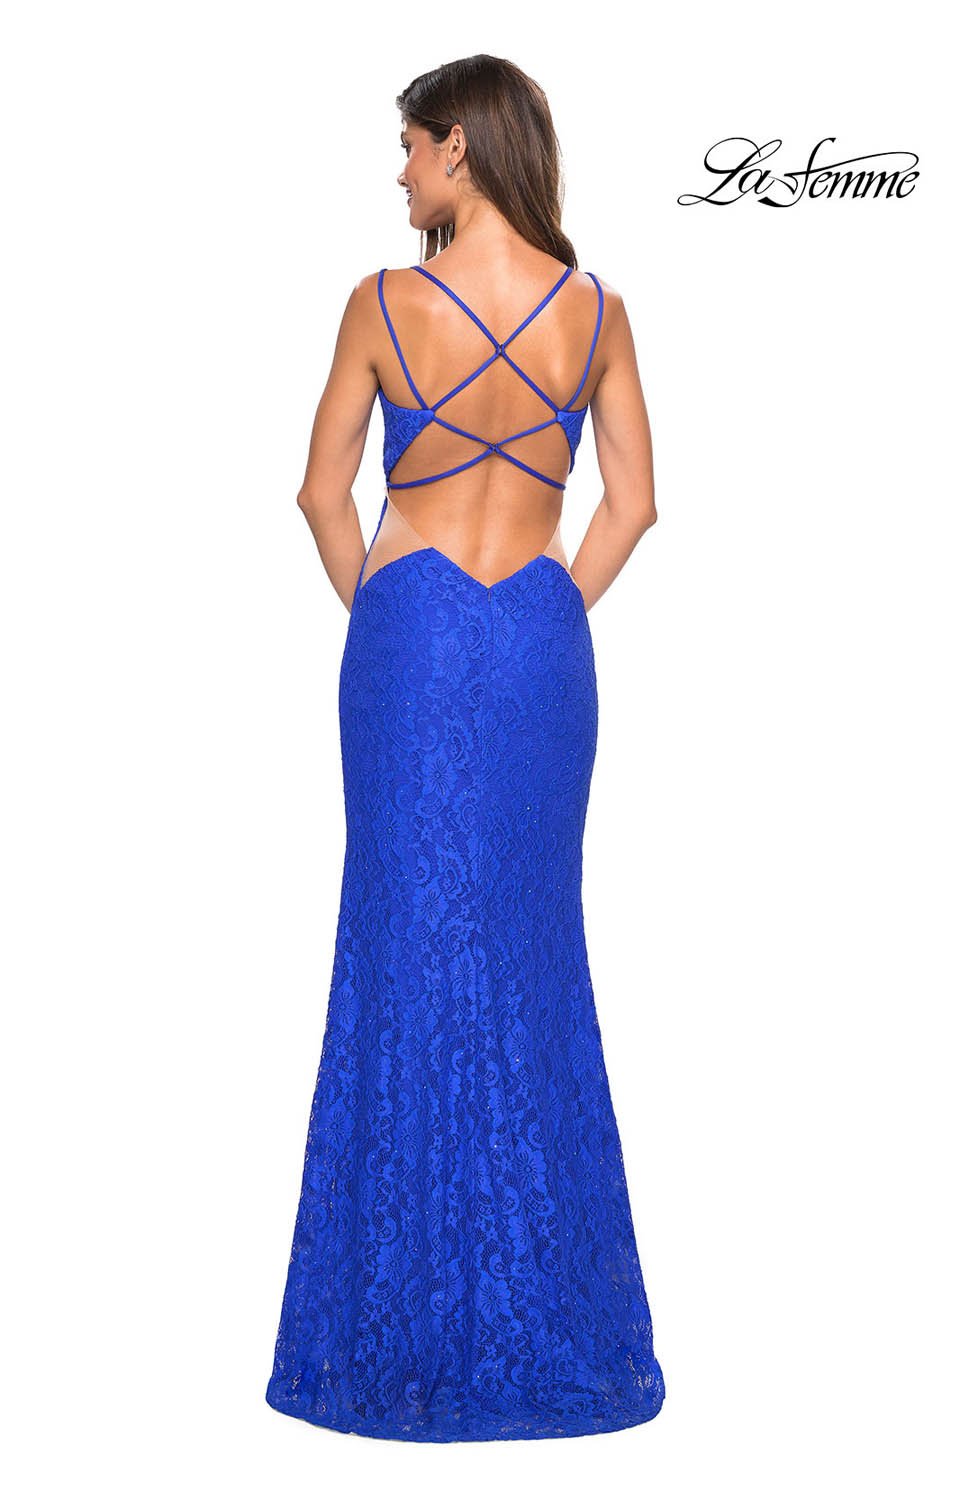 Jennifer Garner bares curves in electric blue gown at the 2018 Oscars